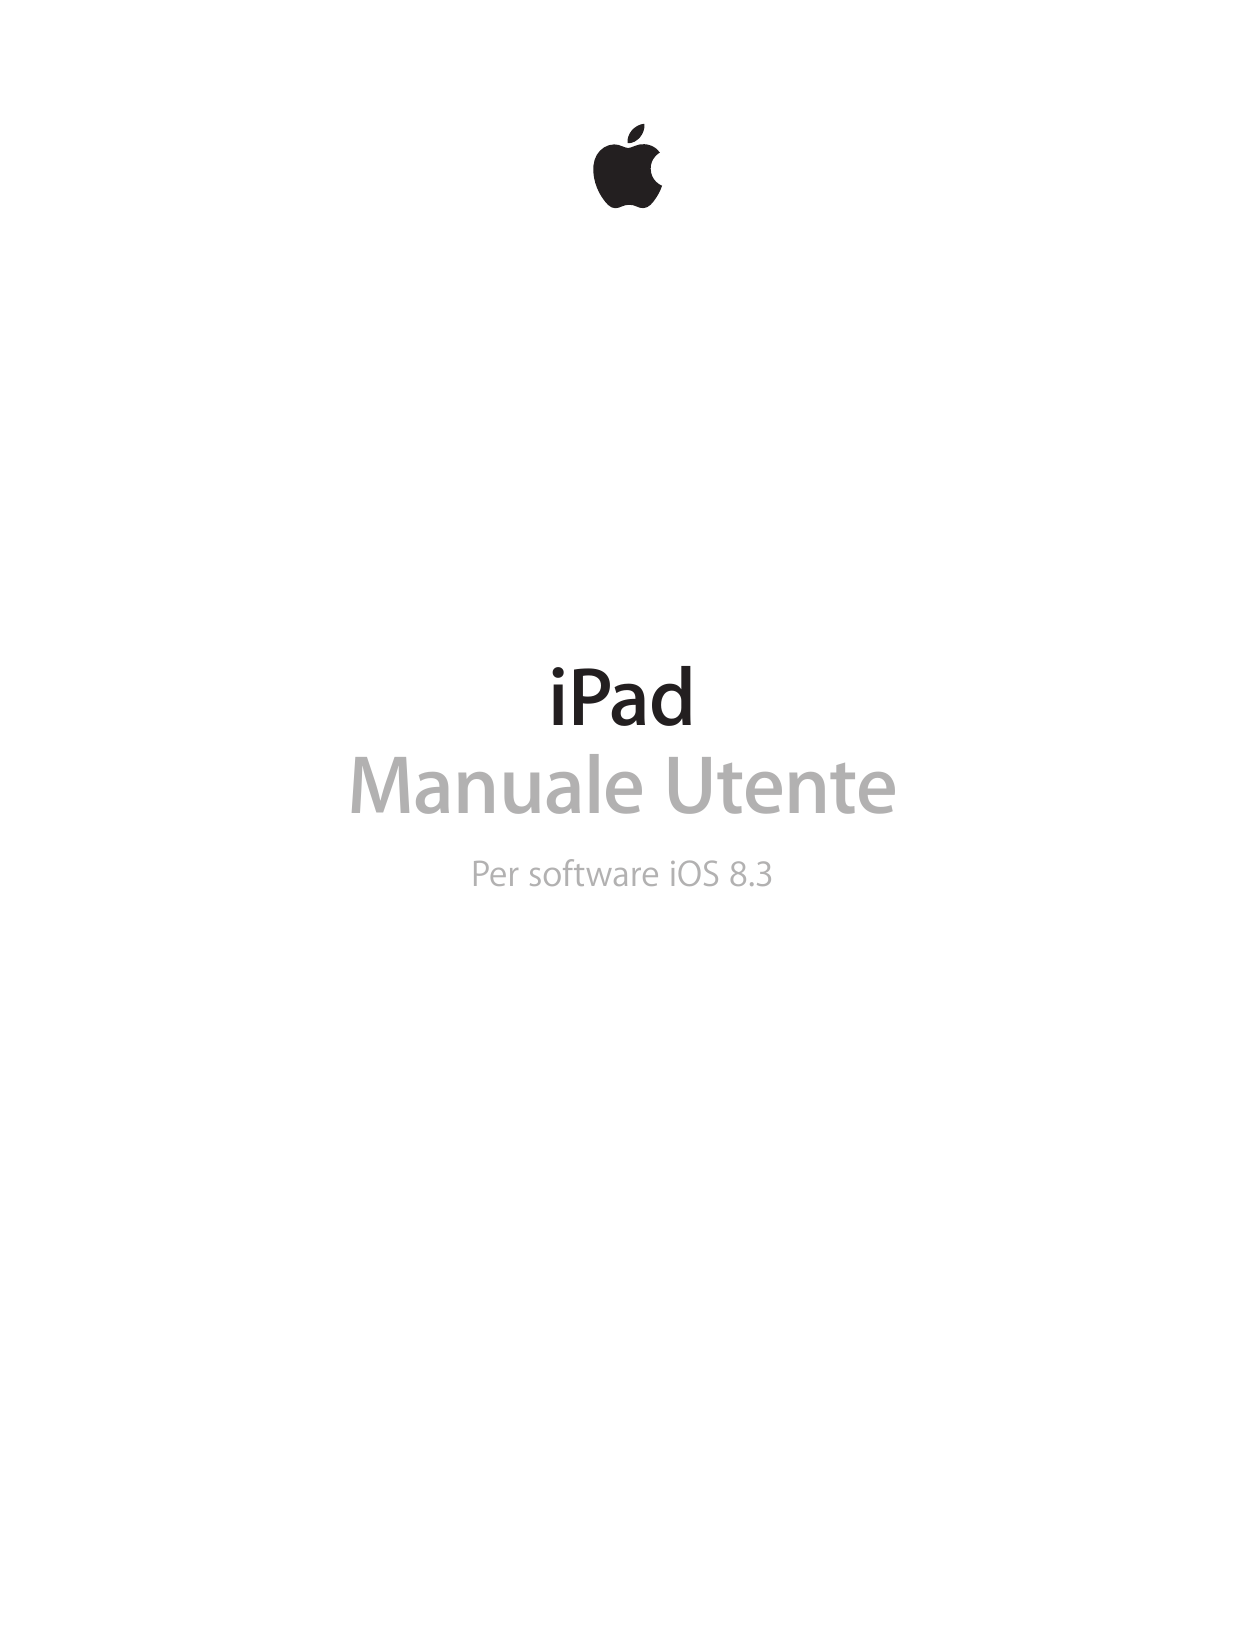   iPadManuale UtentePer software iOS 8.3